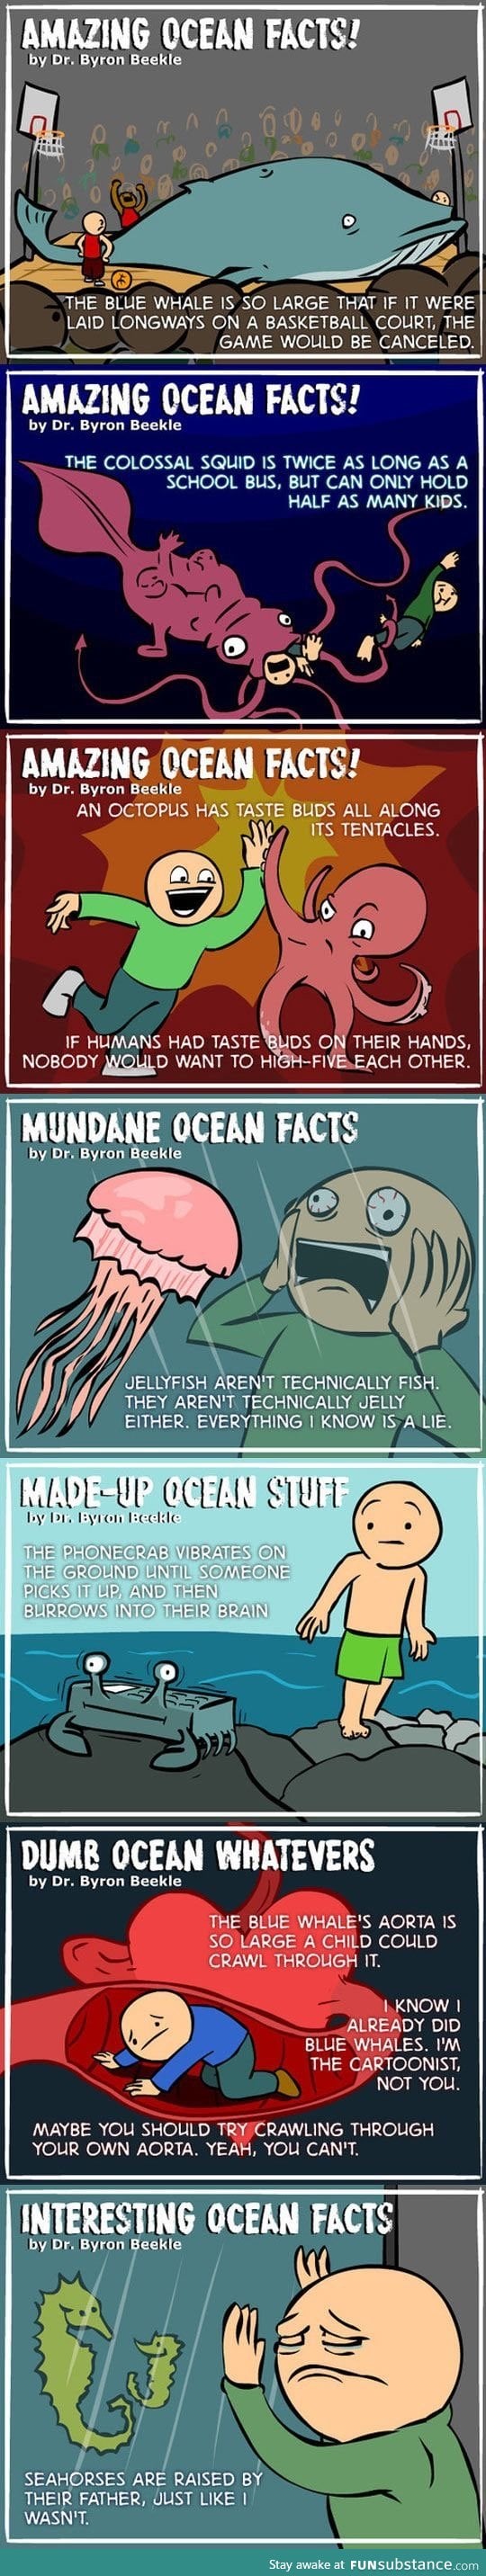 Amazing ocean facts!